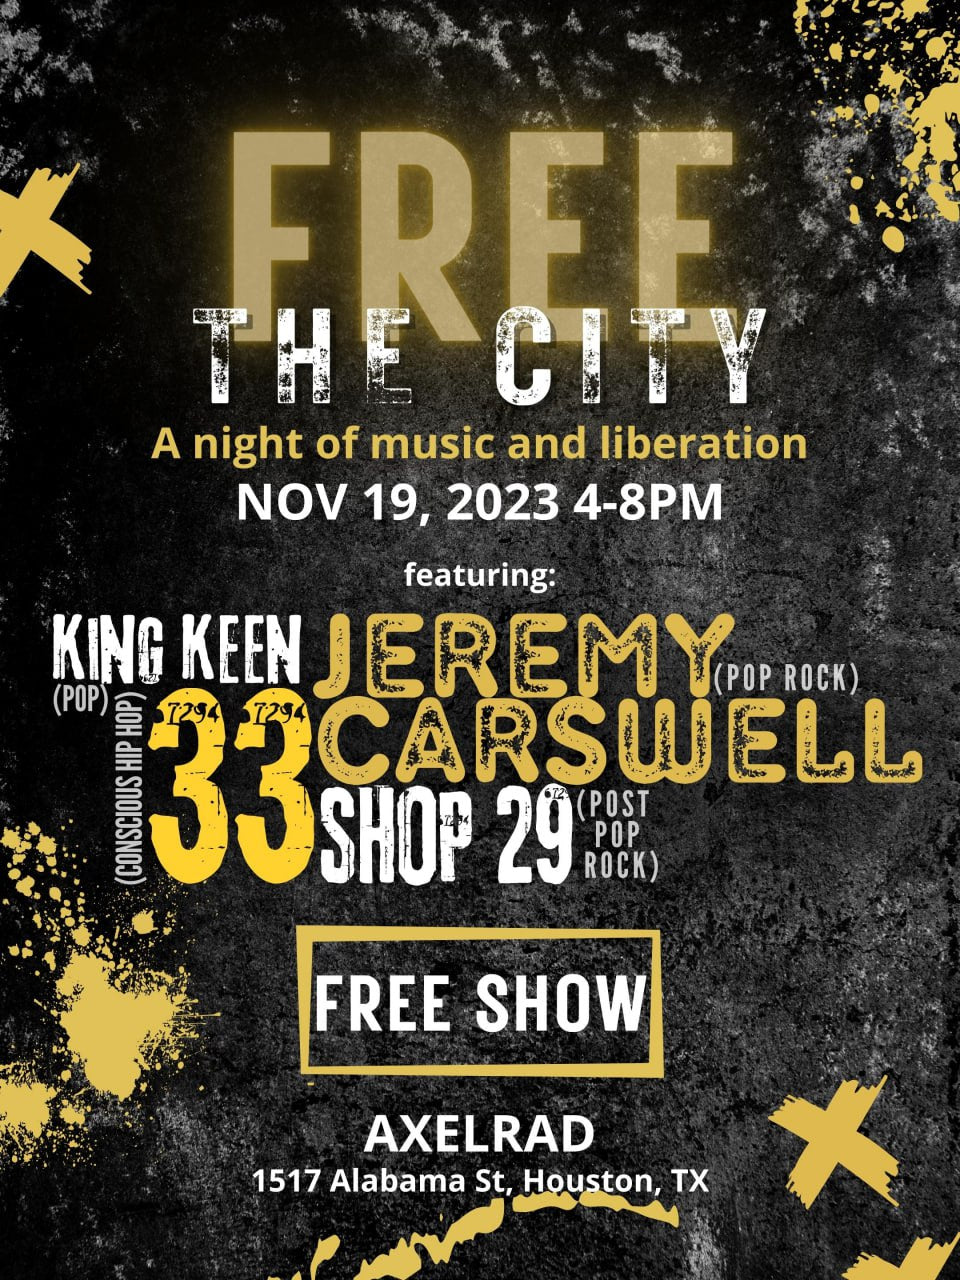 Concert Poster Houston Texas Axelrad Jeremy Carswell November 19 2023